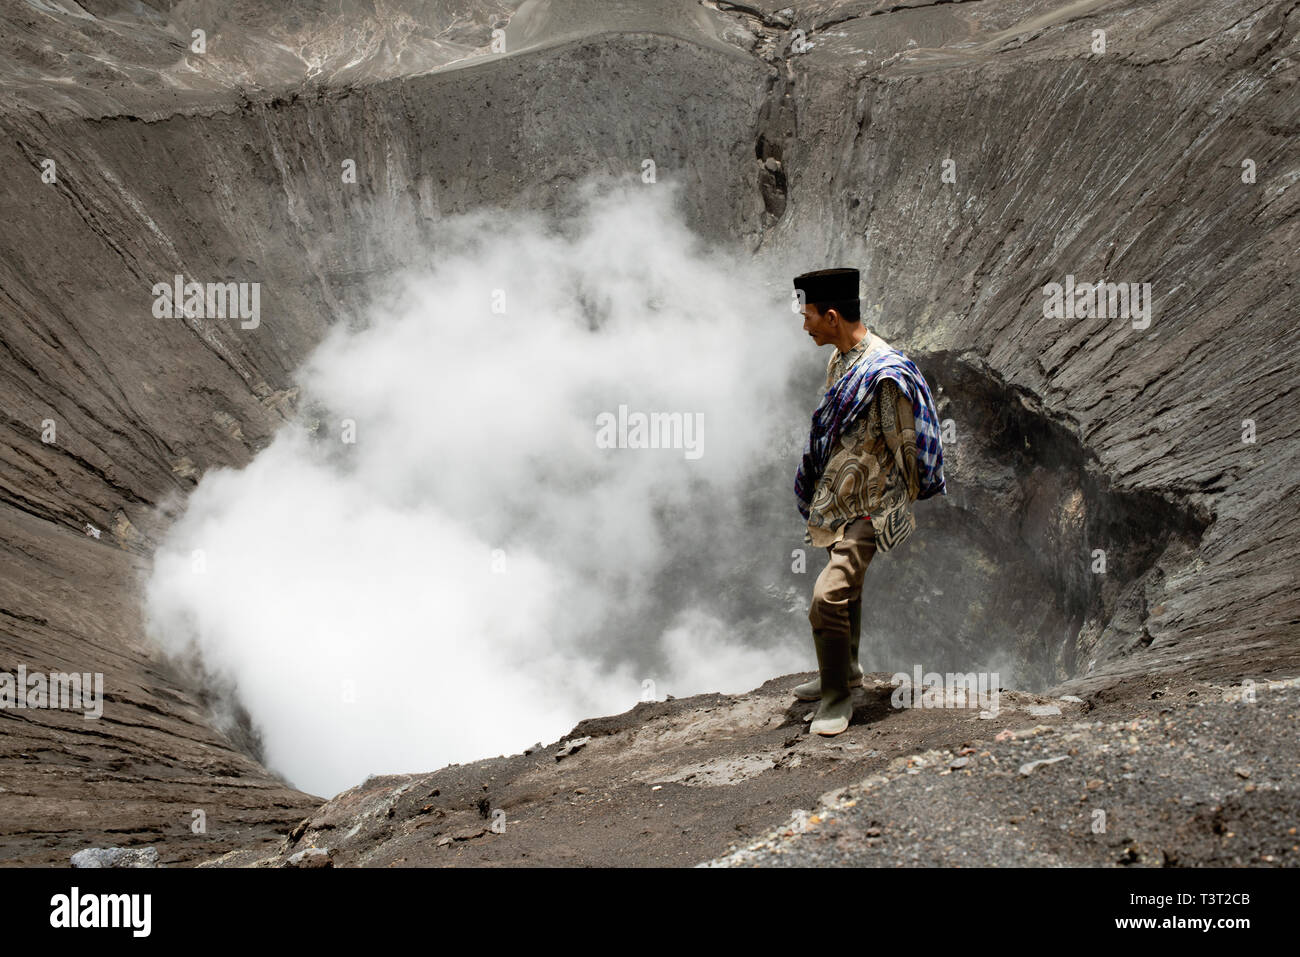 Tenggerese Man Standing On The Edge Of An Active Volcano In Bromo Tengger Semeru National Park. January 17, 2014 - Java, Indonesia Stock Photo